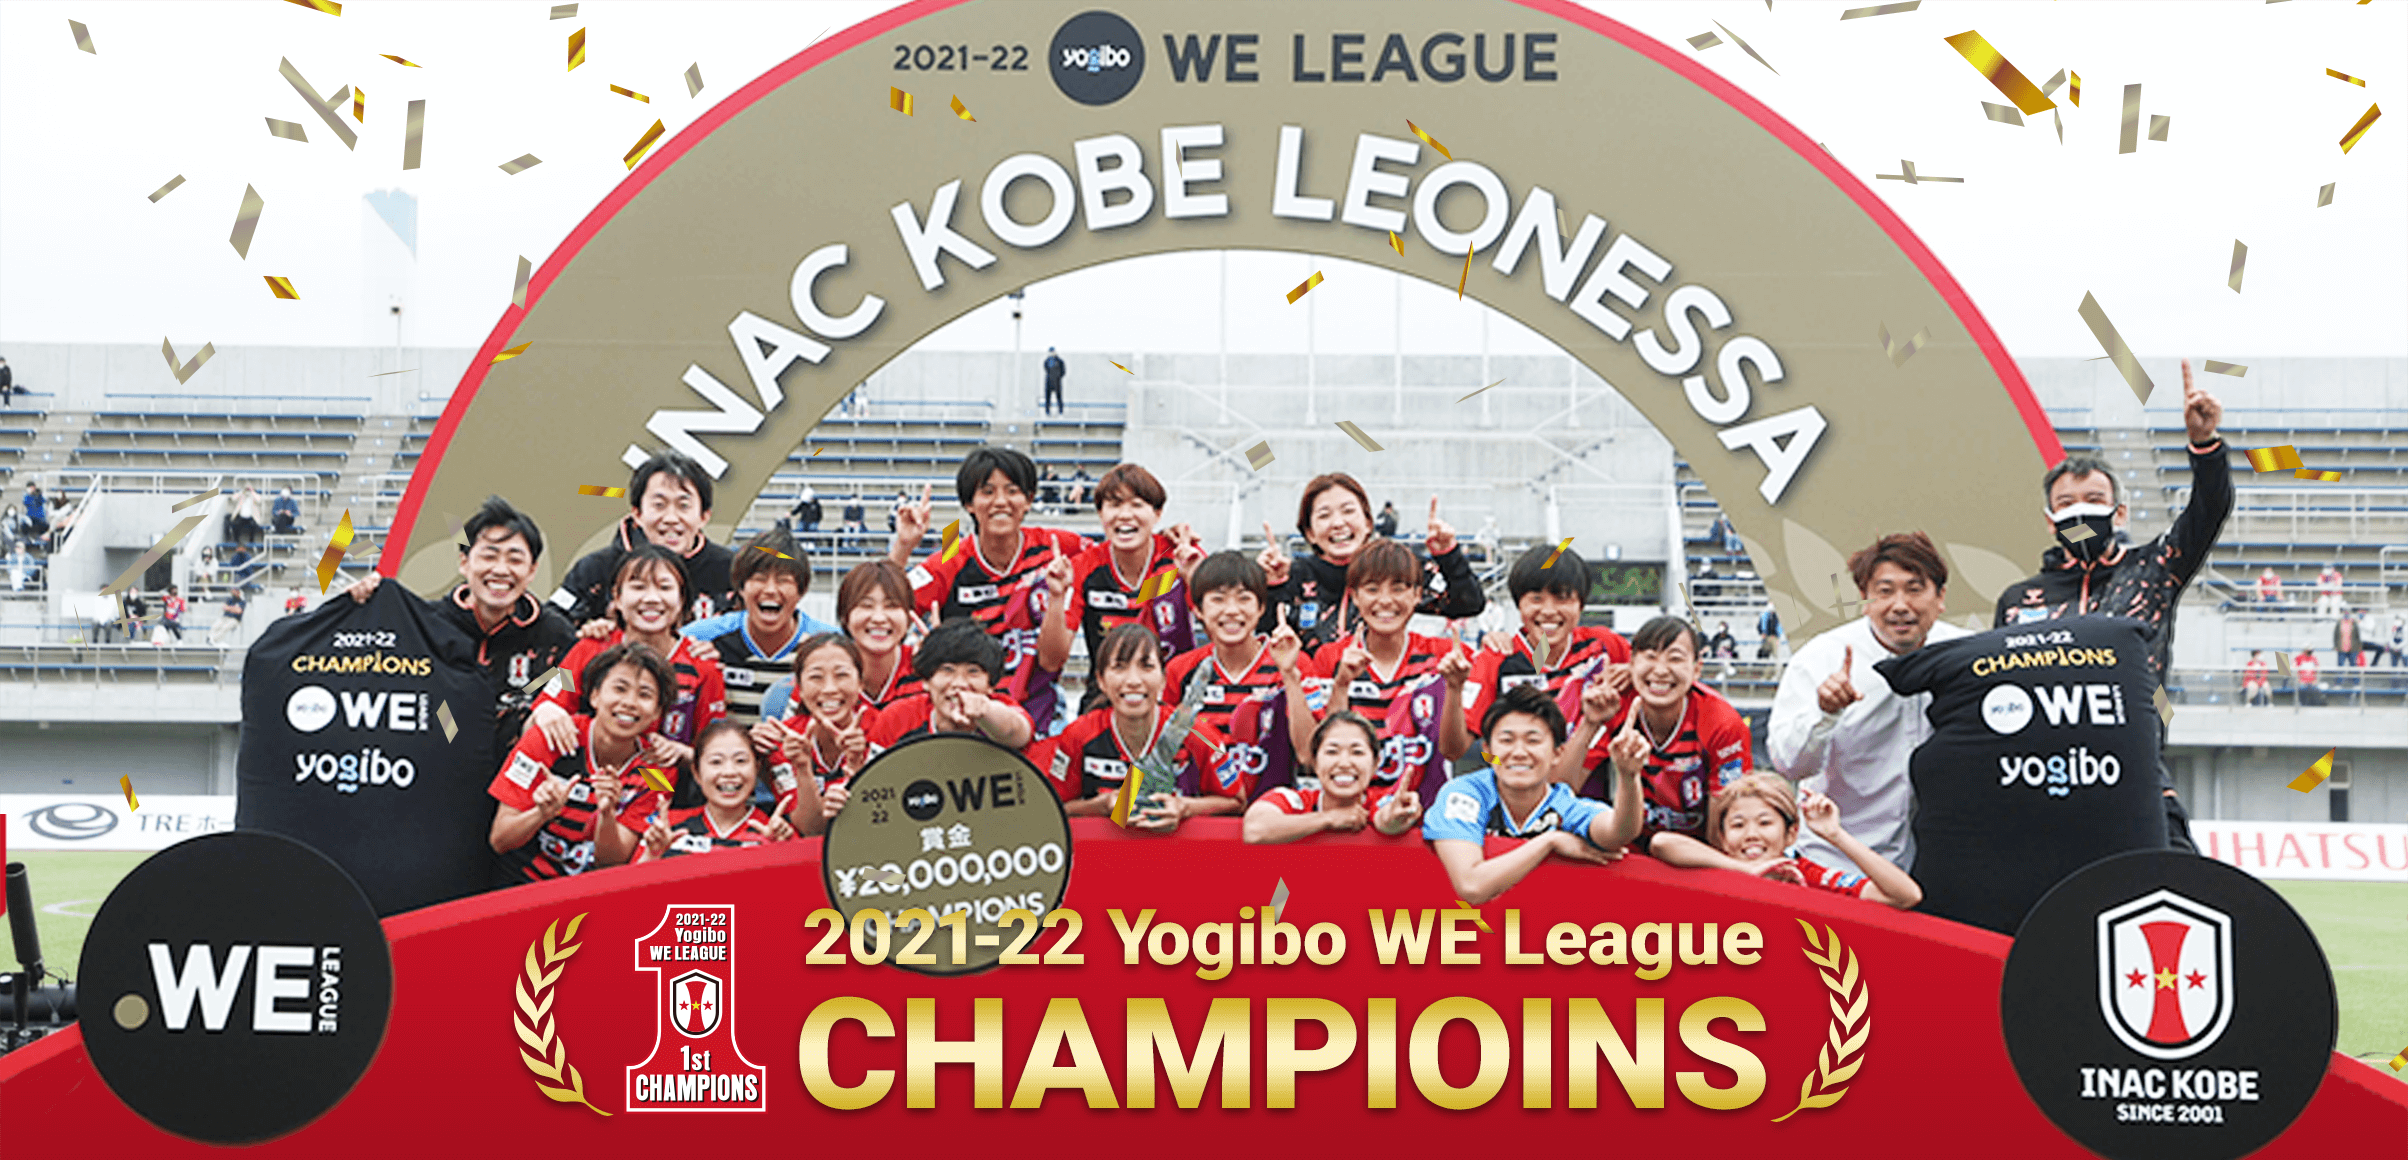 2021-22 Yogibo WE League CHAMPIONS